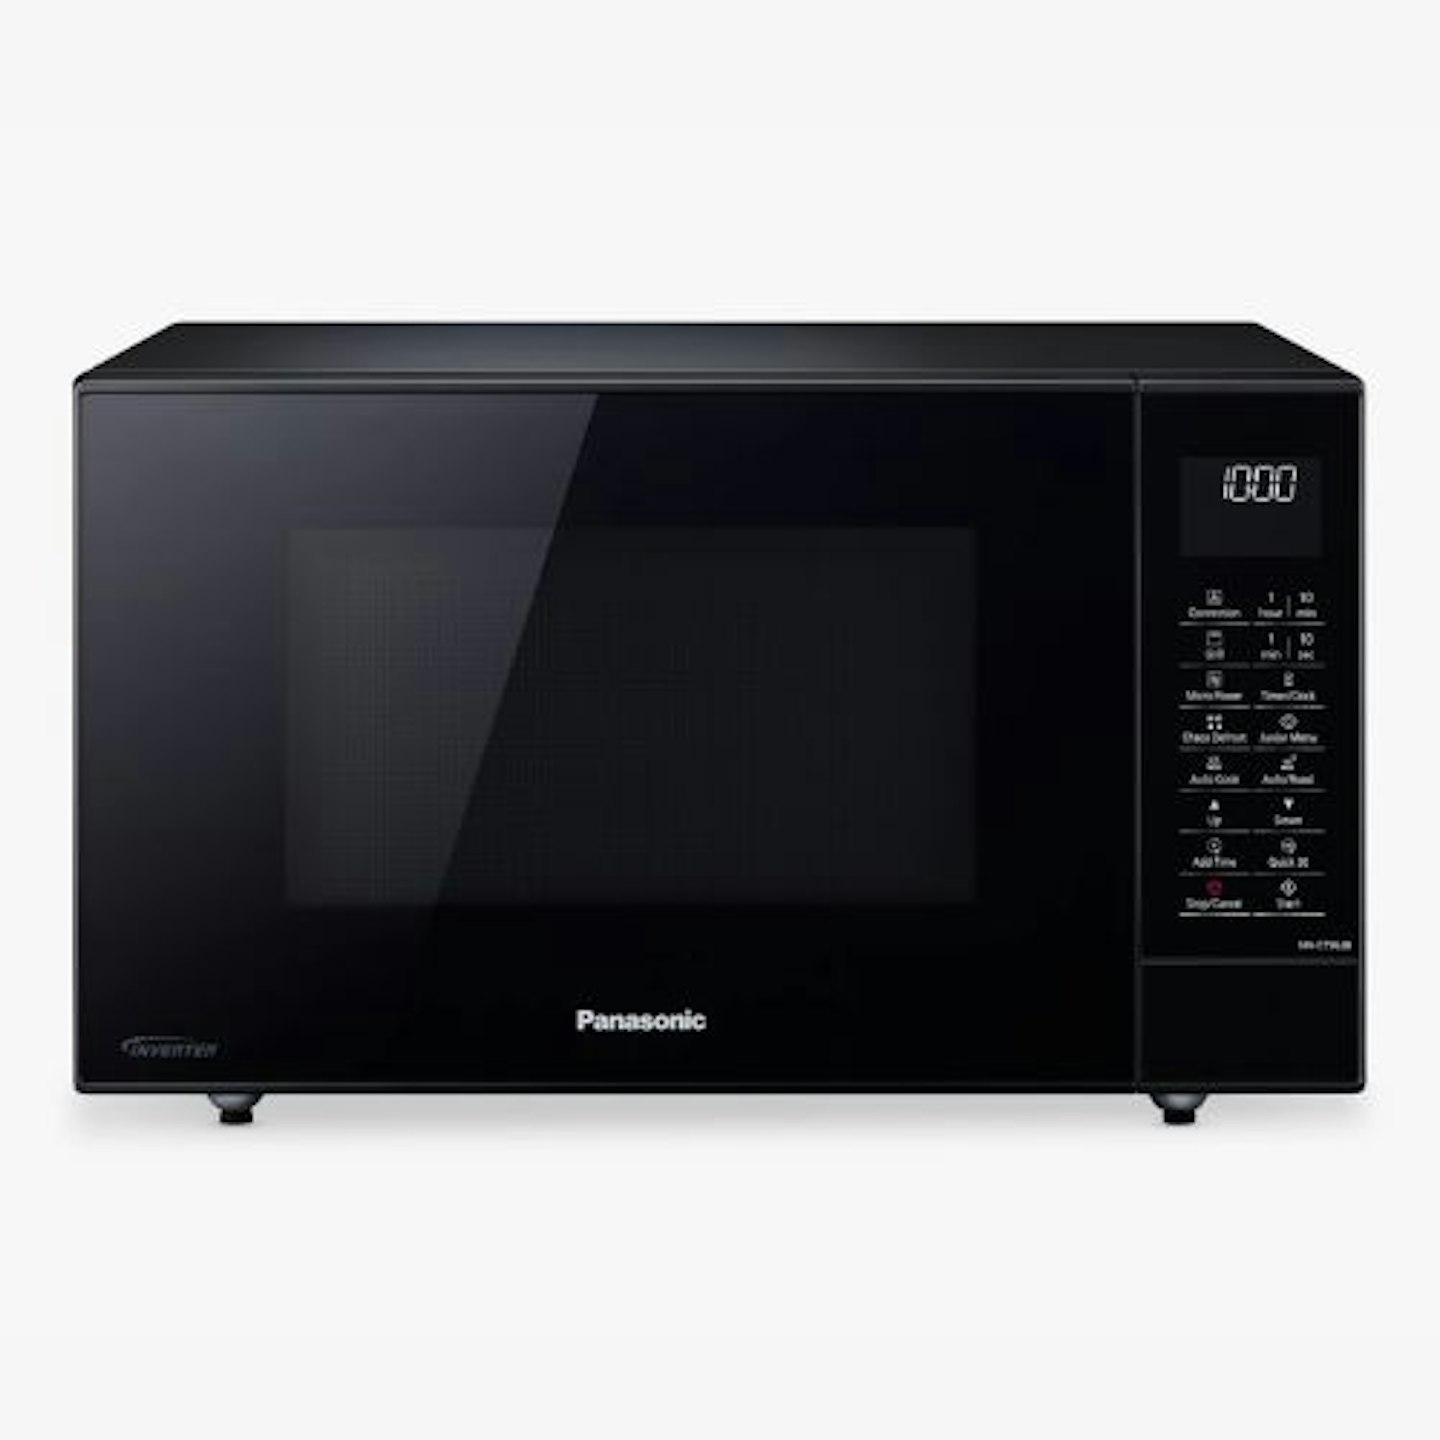 NN-CT56JBBPQ 27L Slimline Combination Microwave Oven, Black